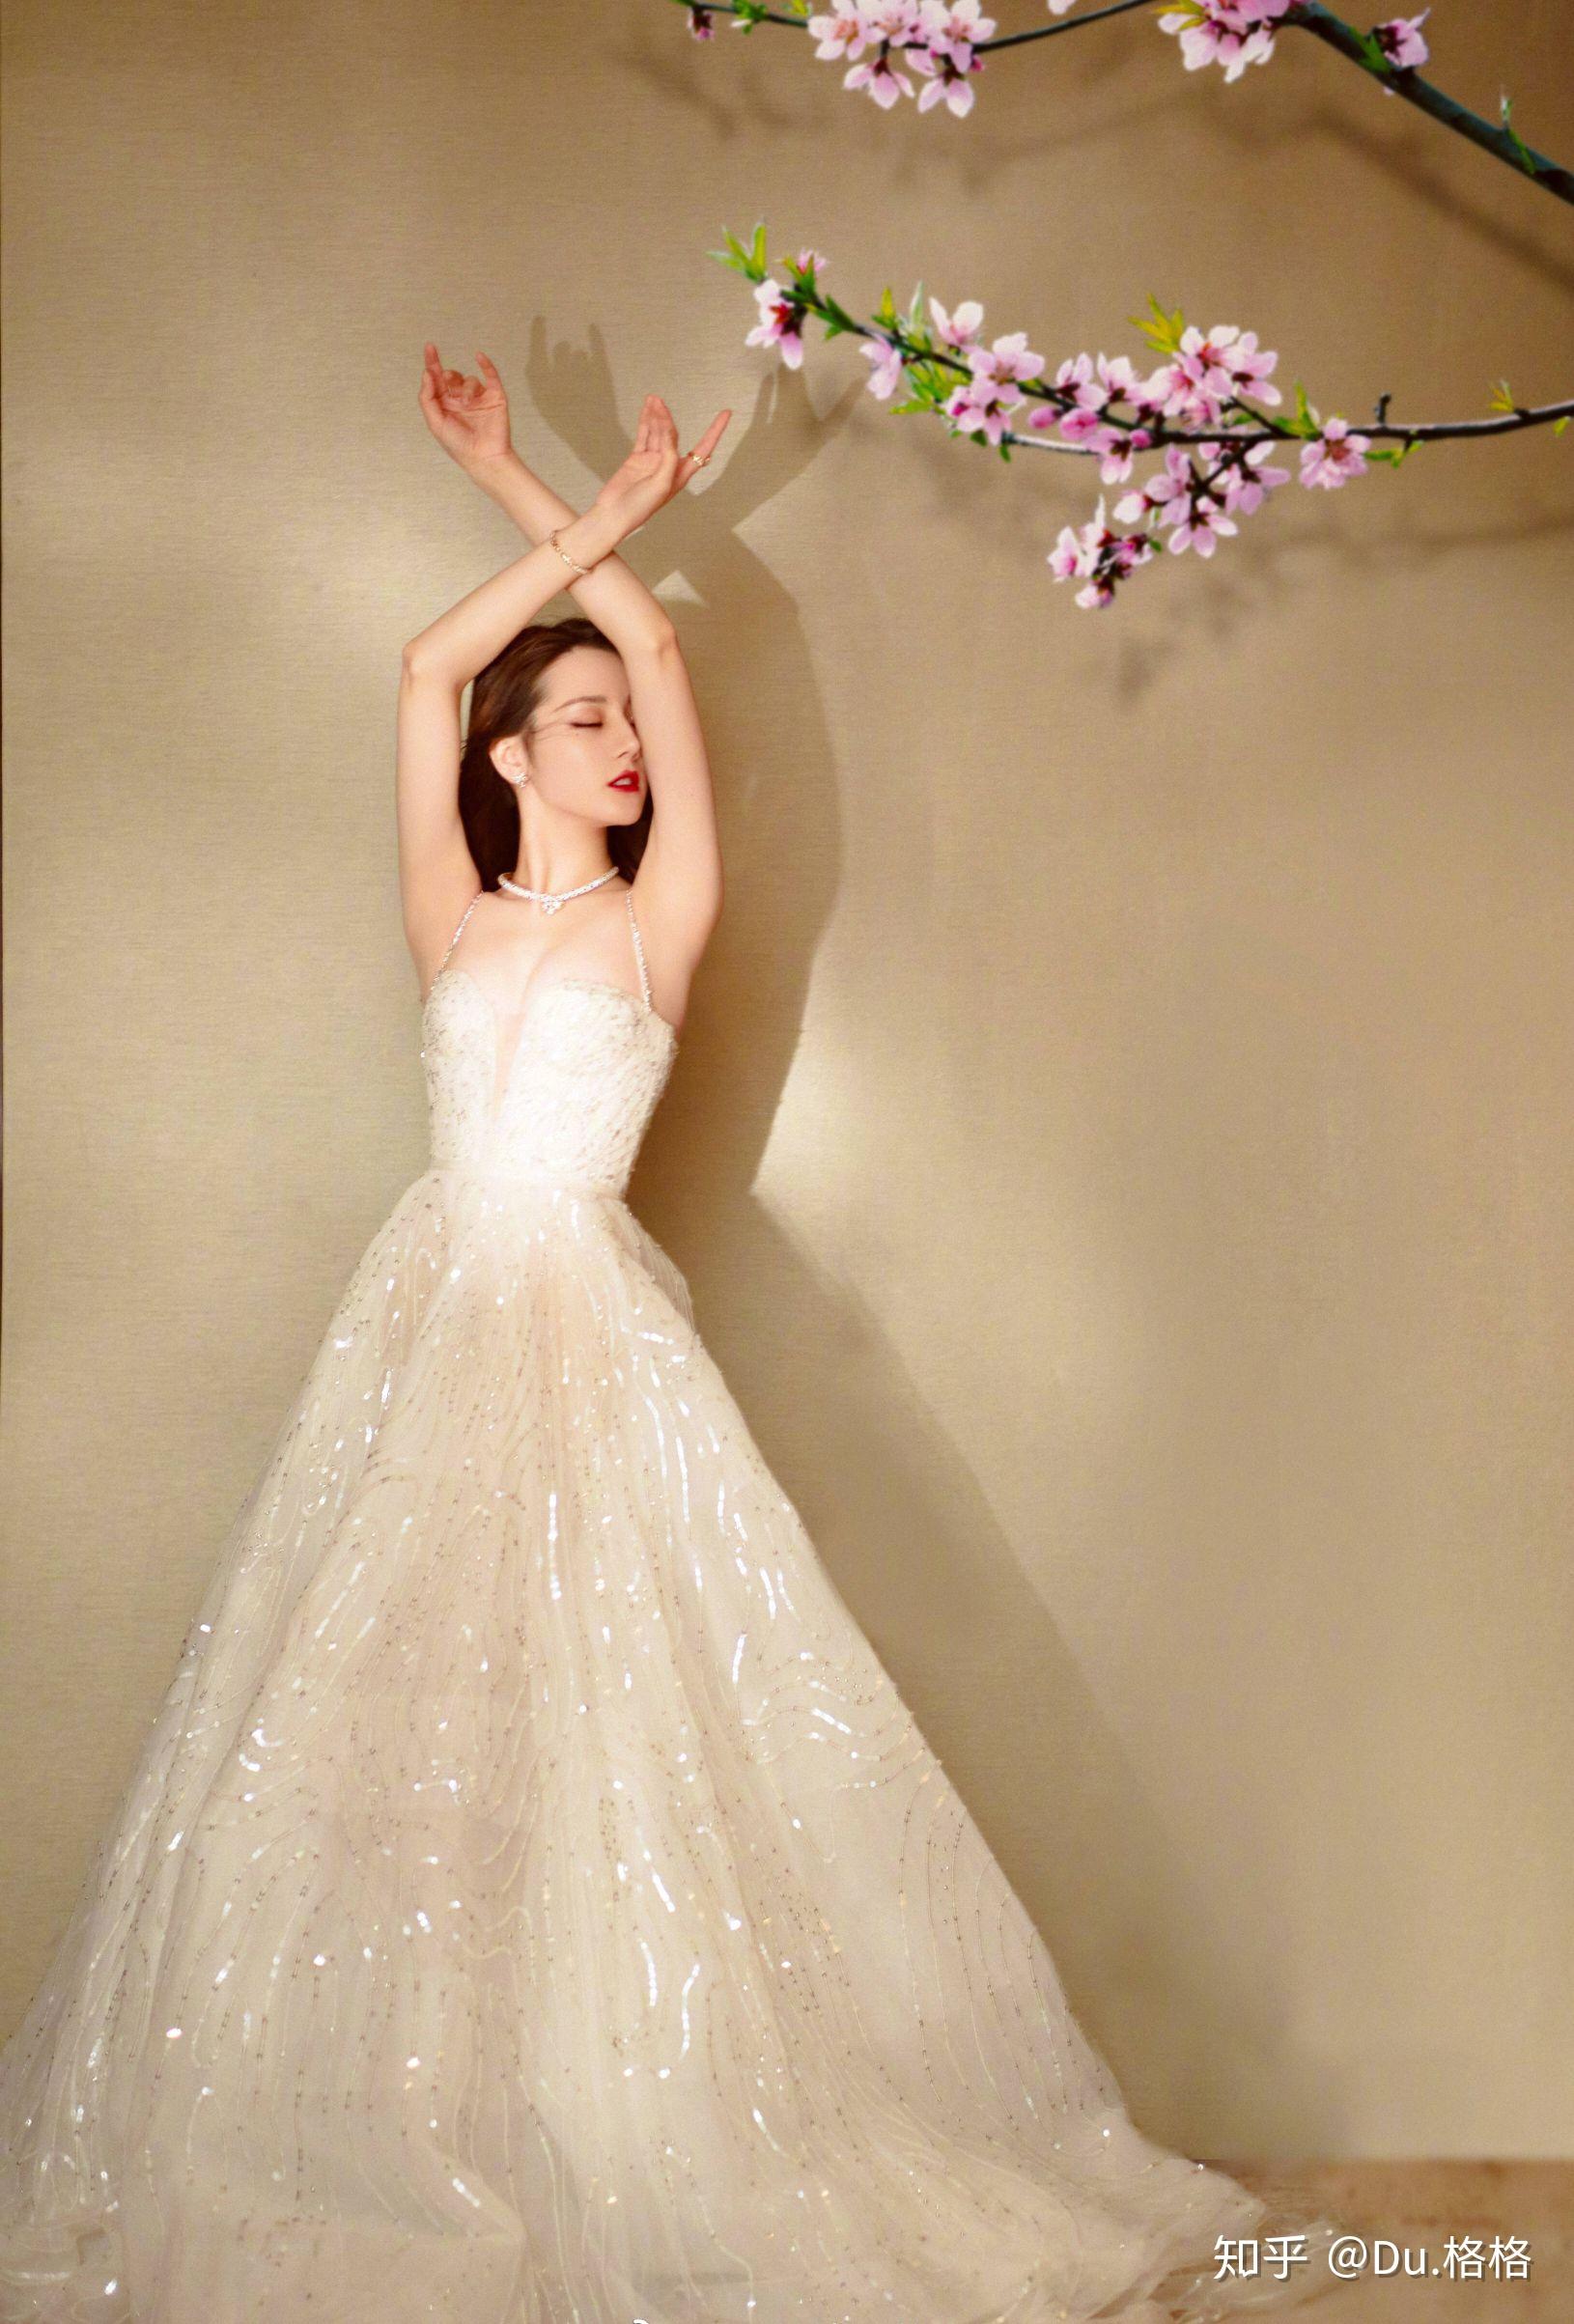 ShiniUni 婚纱作品《流动的盛宴》 - ShiniUni婚纱礼服高级定制设计 - 设计师品牌